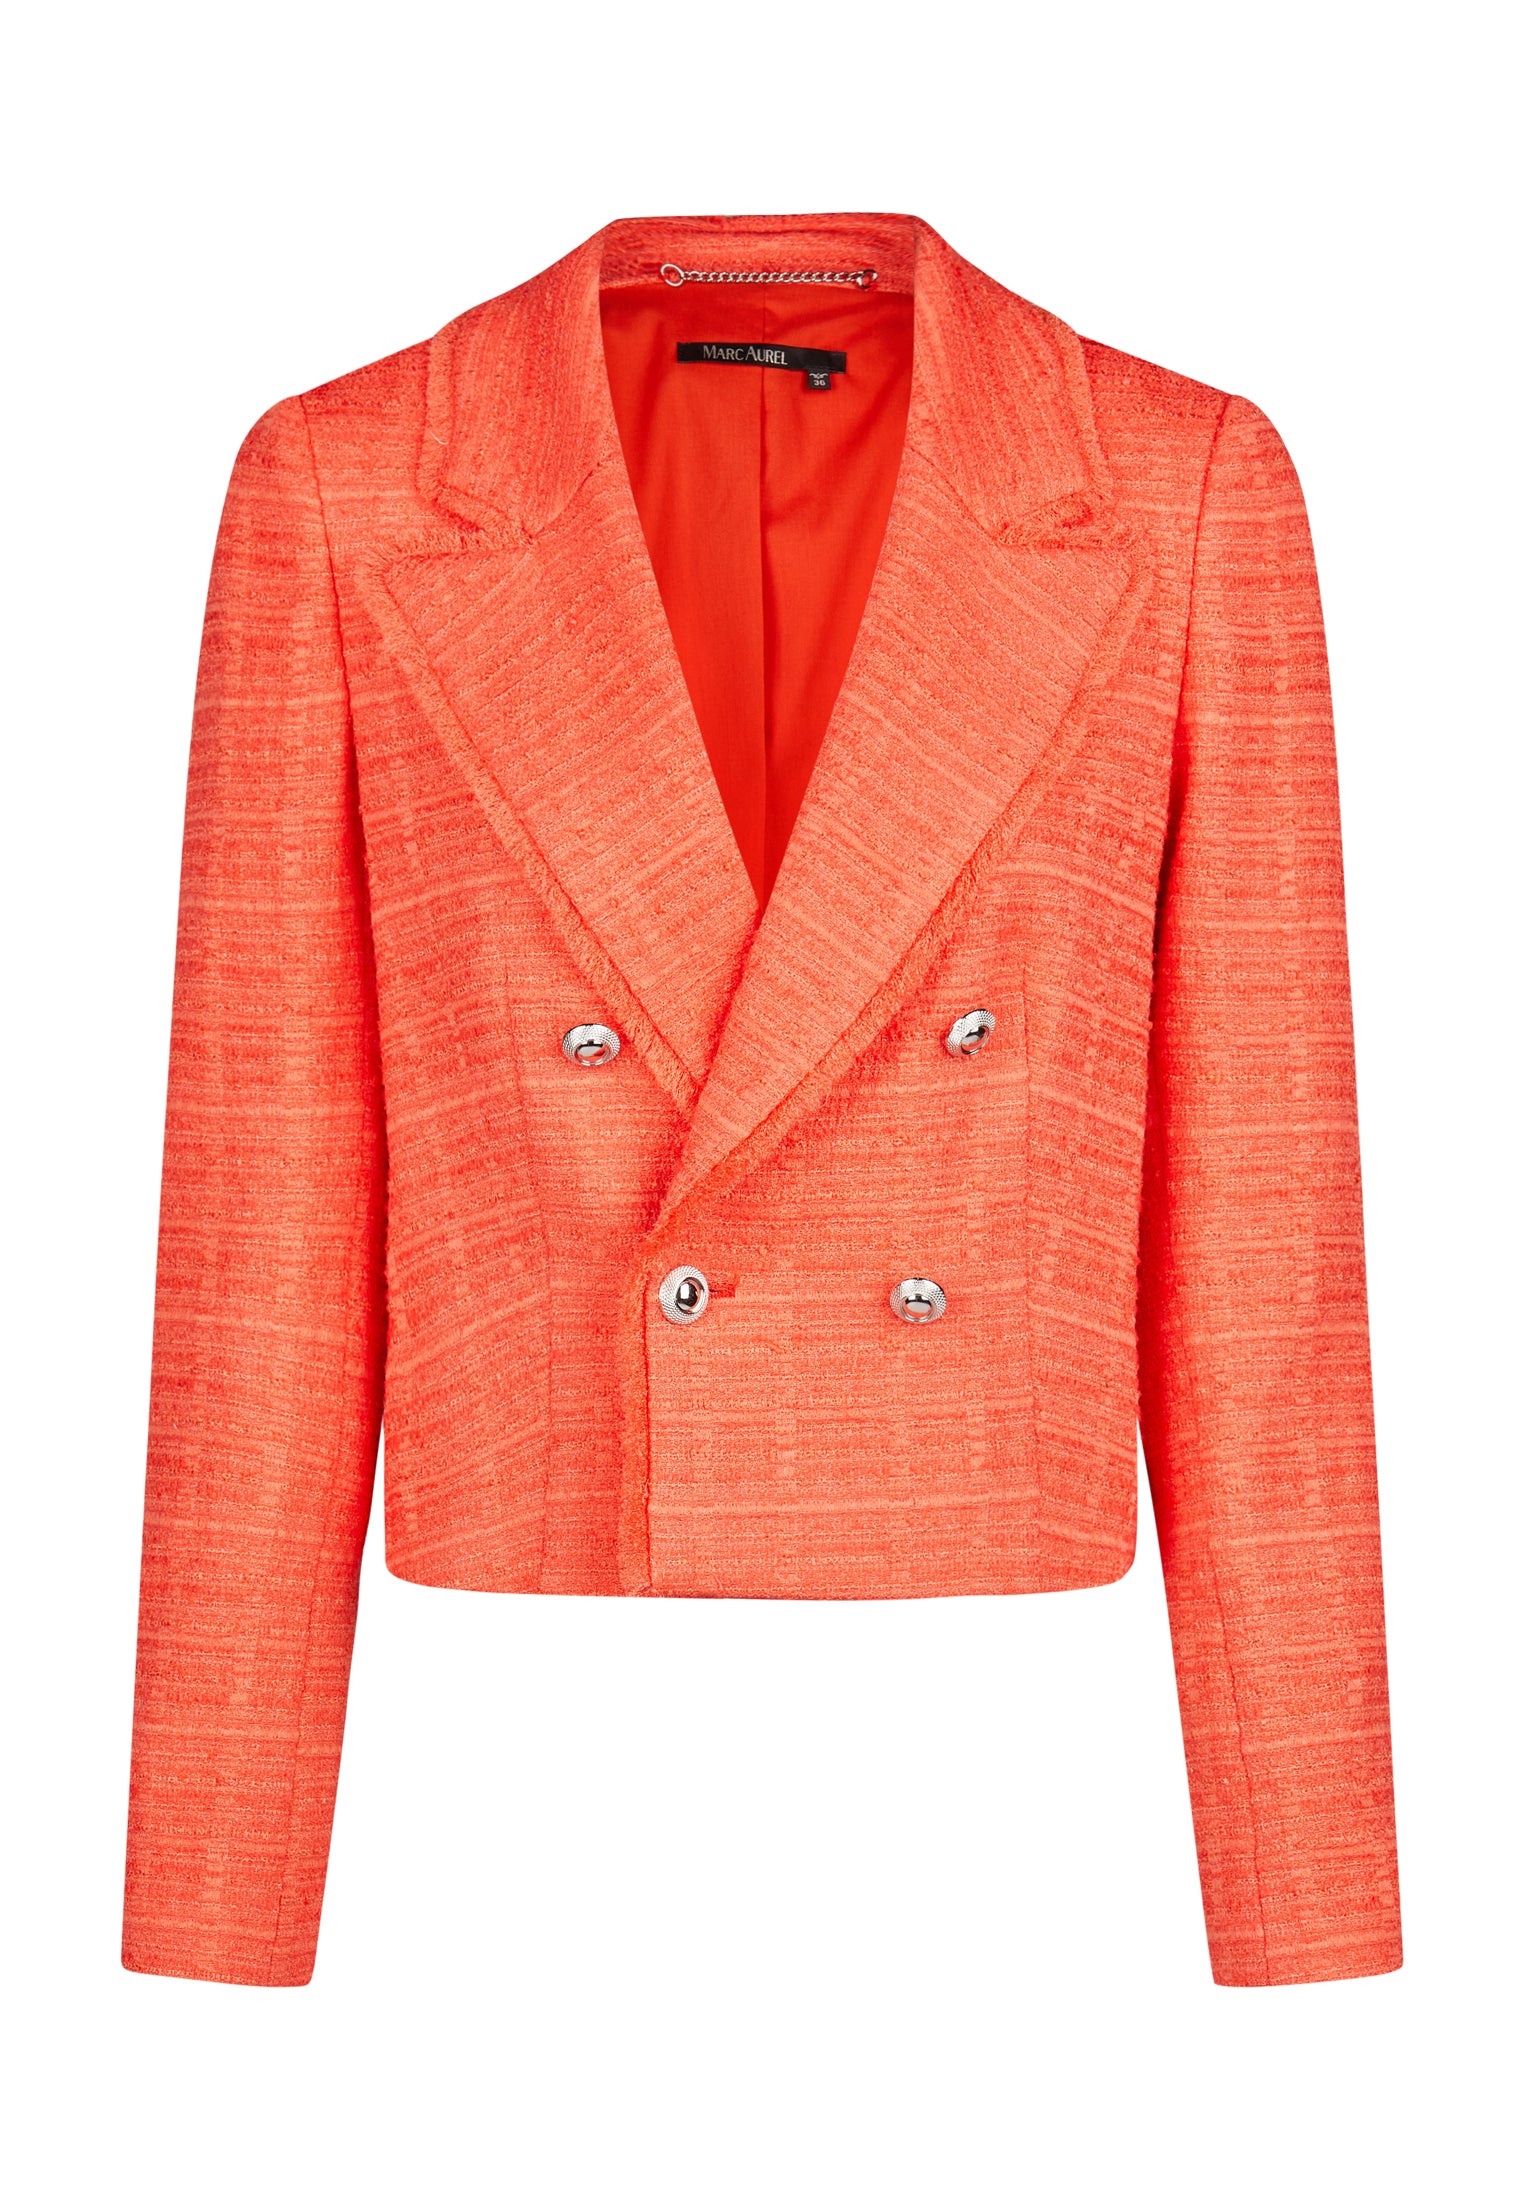 Marc Aurel summer Orange DB jacket